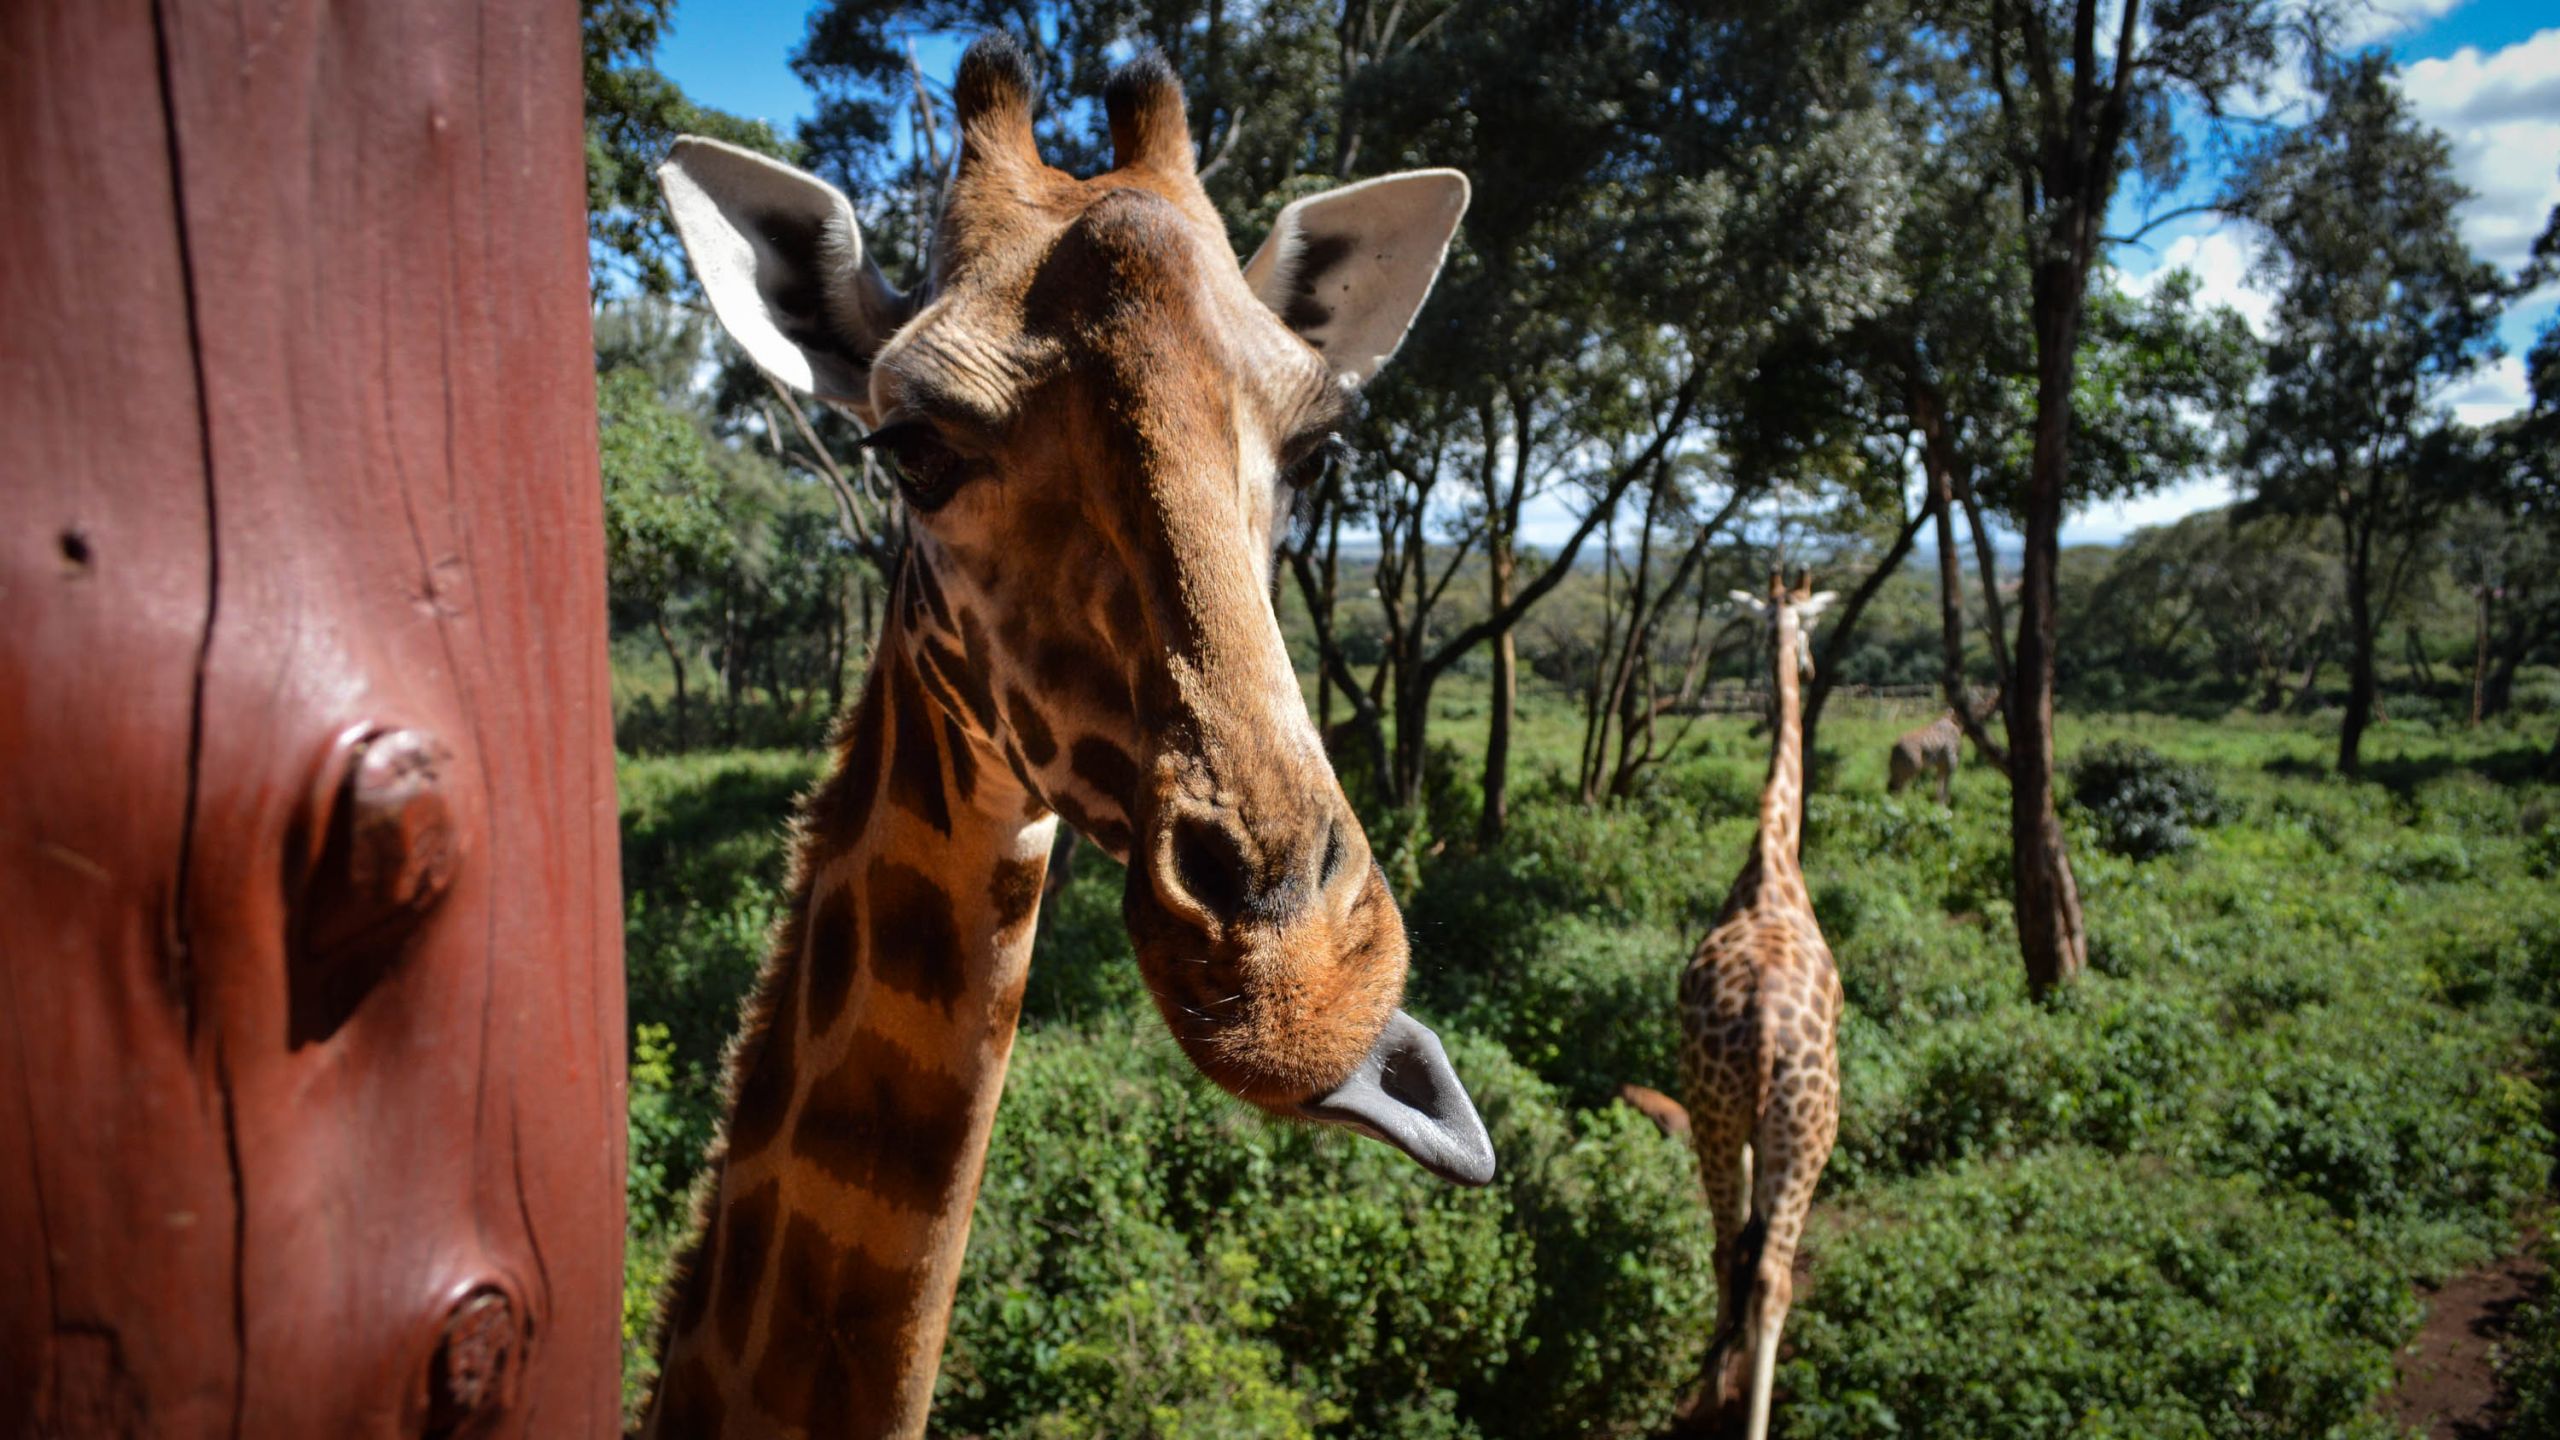 15 giraffe center near nairobi photo by joe yogerst